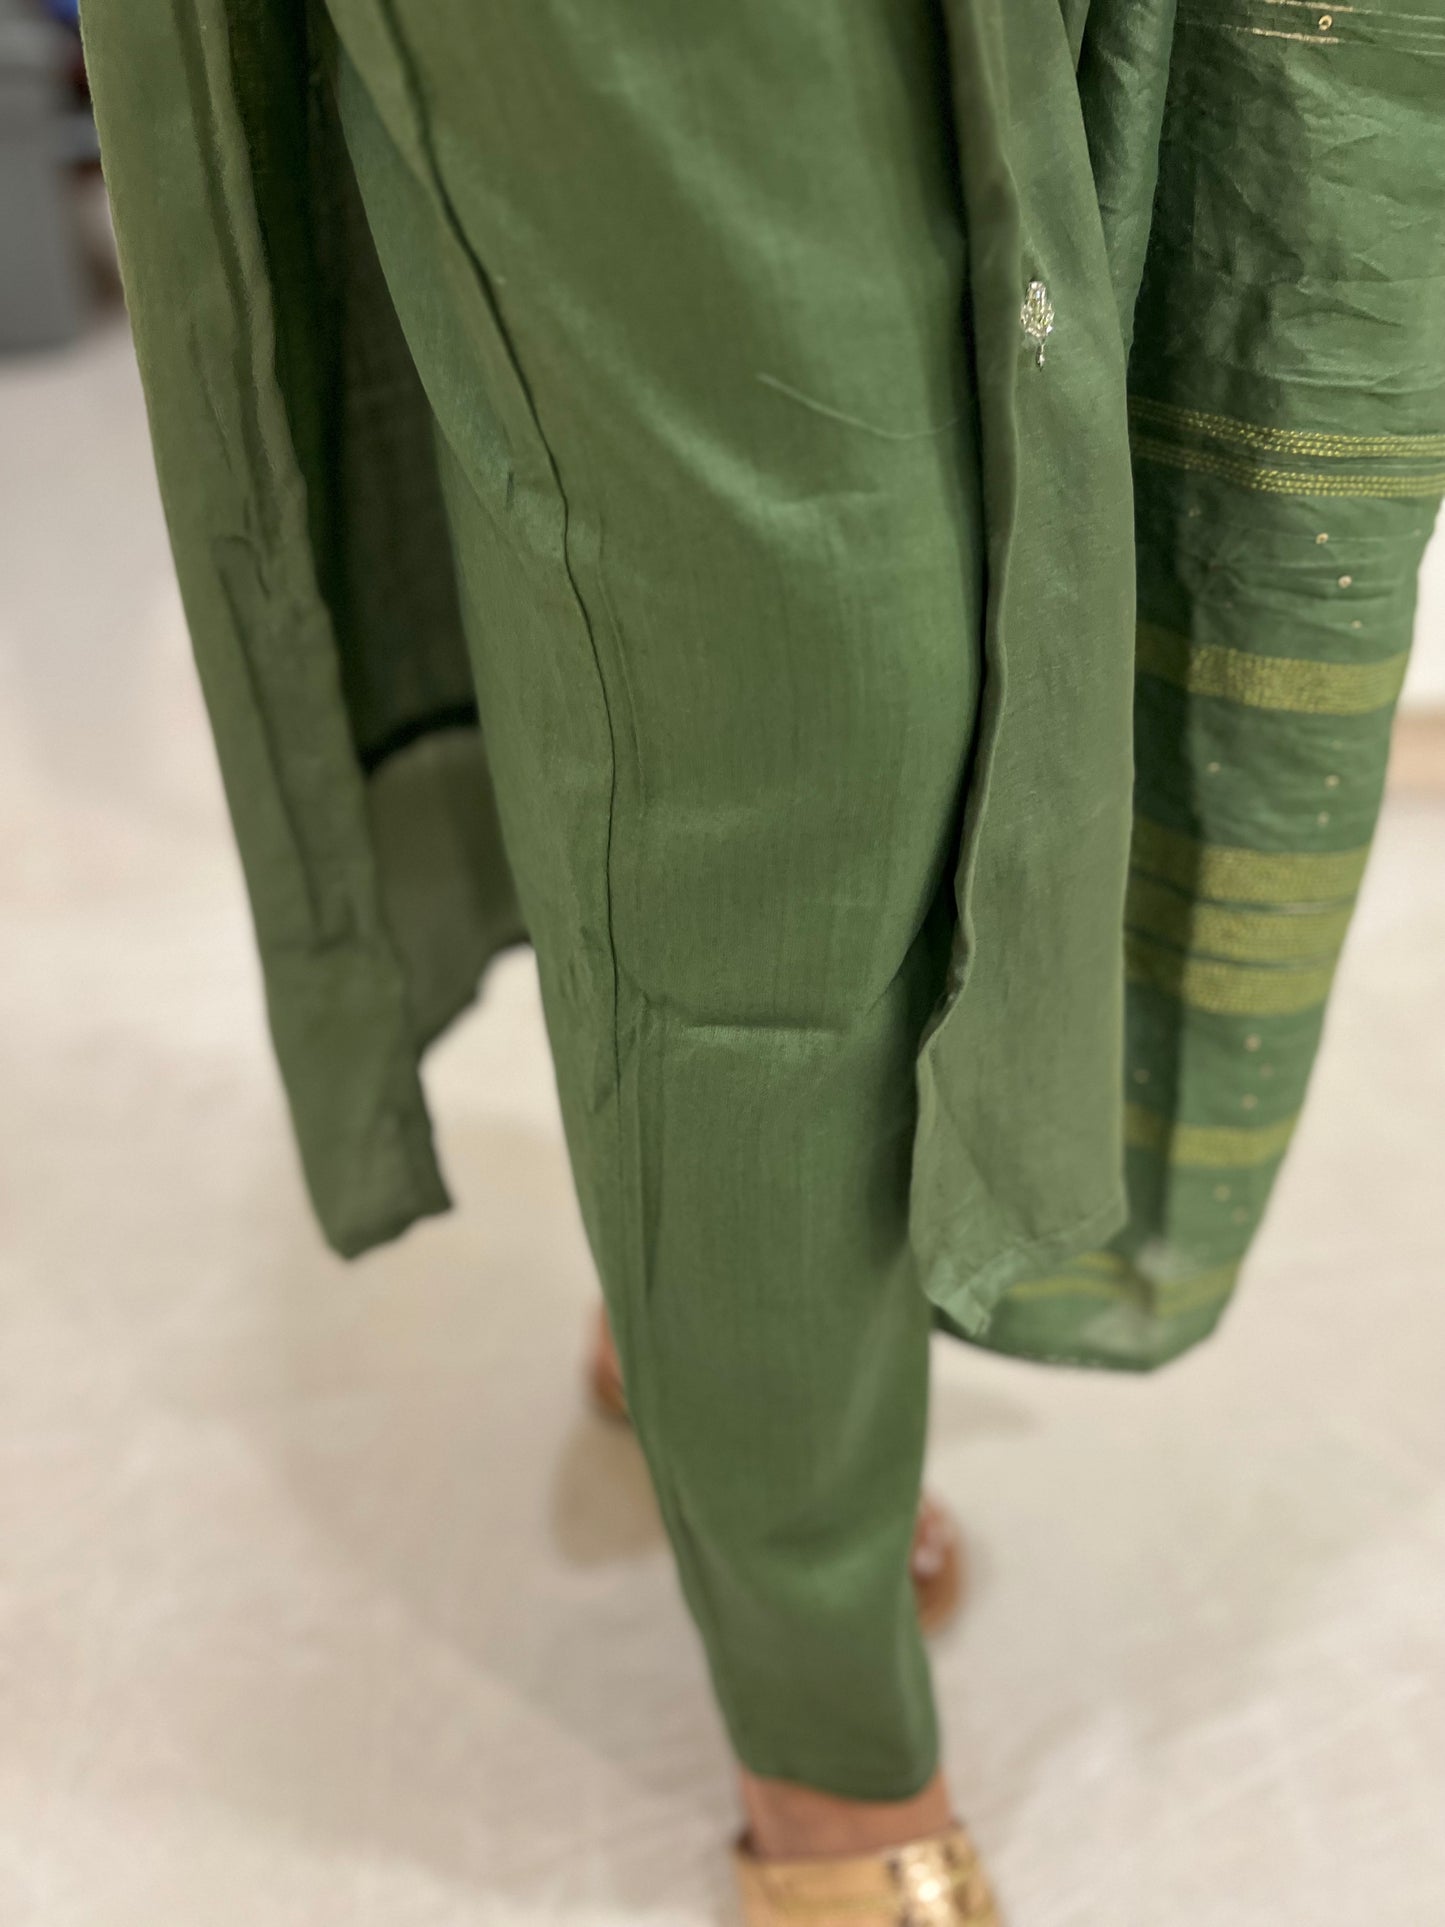 Southloom Stitched Semi Silk Salwar Set in Green and Designer Sequins Works in Yoke Portion